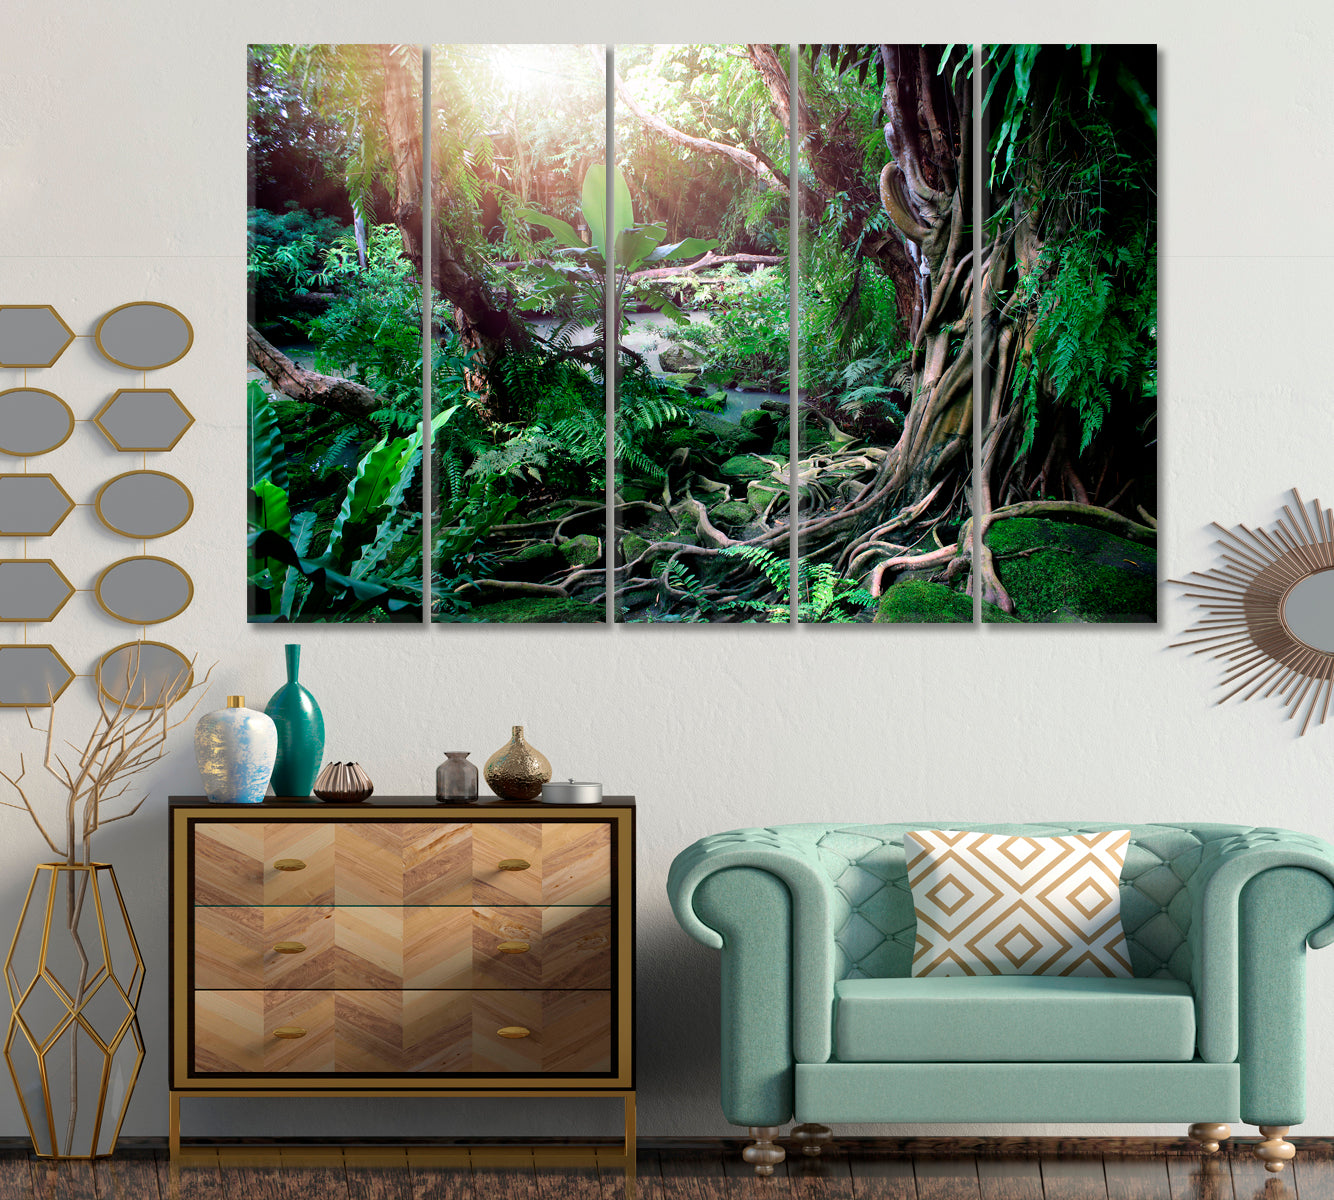 LIANA VINES JUNGLE RAINFOREST Colored Lush Scenes Landscape Nature Wall Canvas Print Artesty 5 panels 36" x 24" 